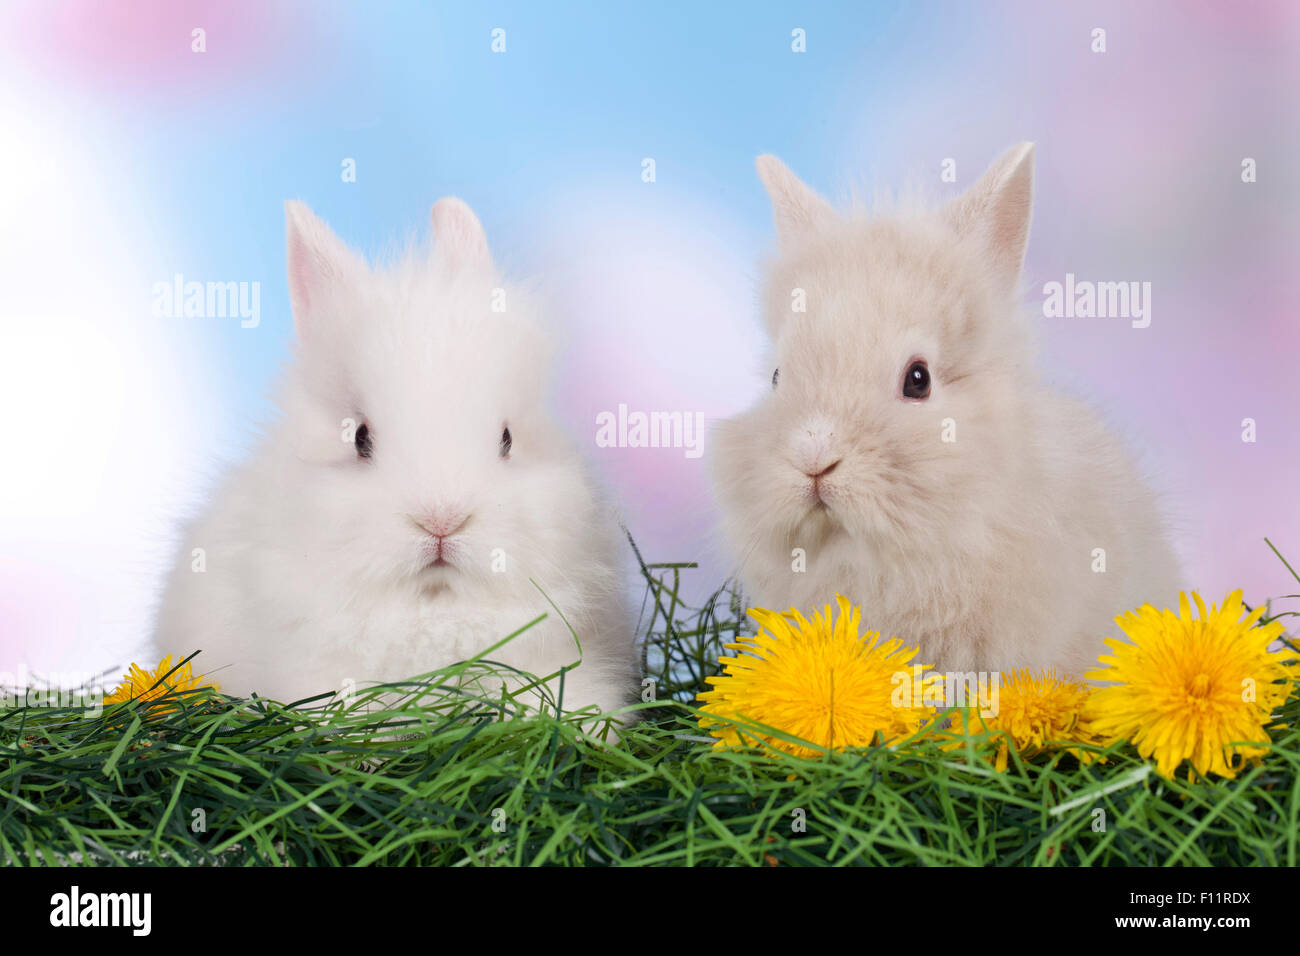 Dwarf Rabbit, Lionhead Rabbit Two individuals grass Dandelion flowers Stock Photo